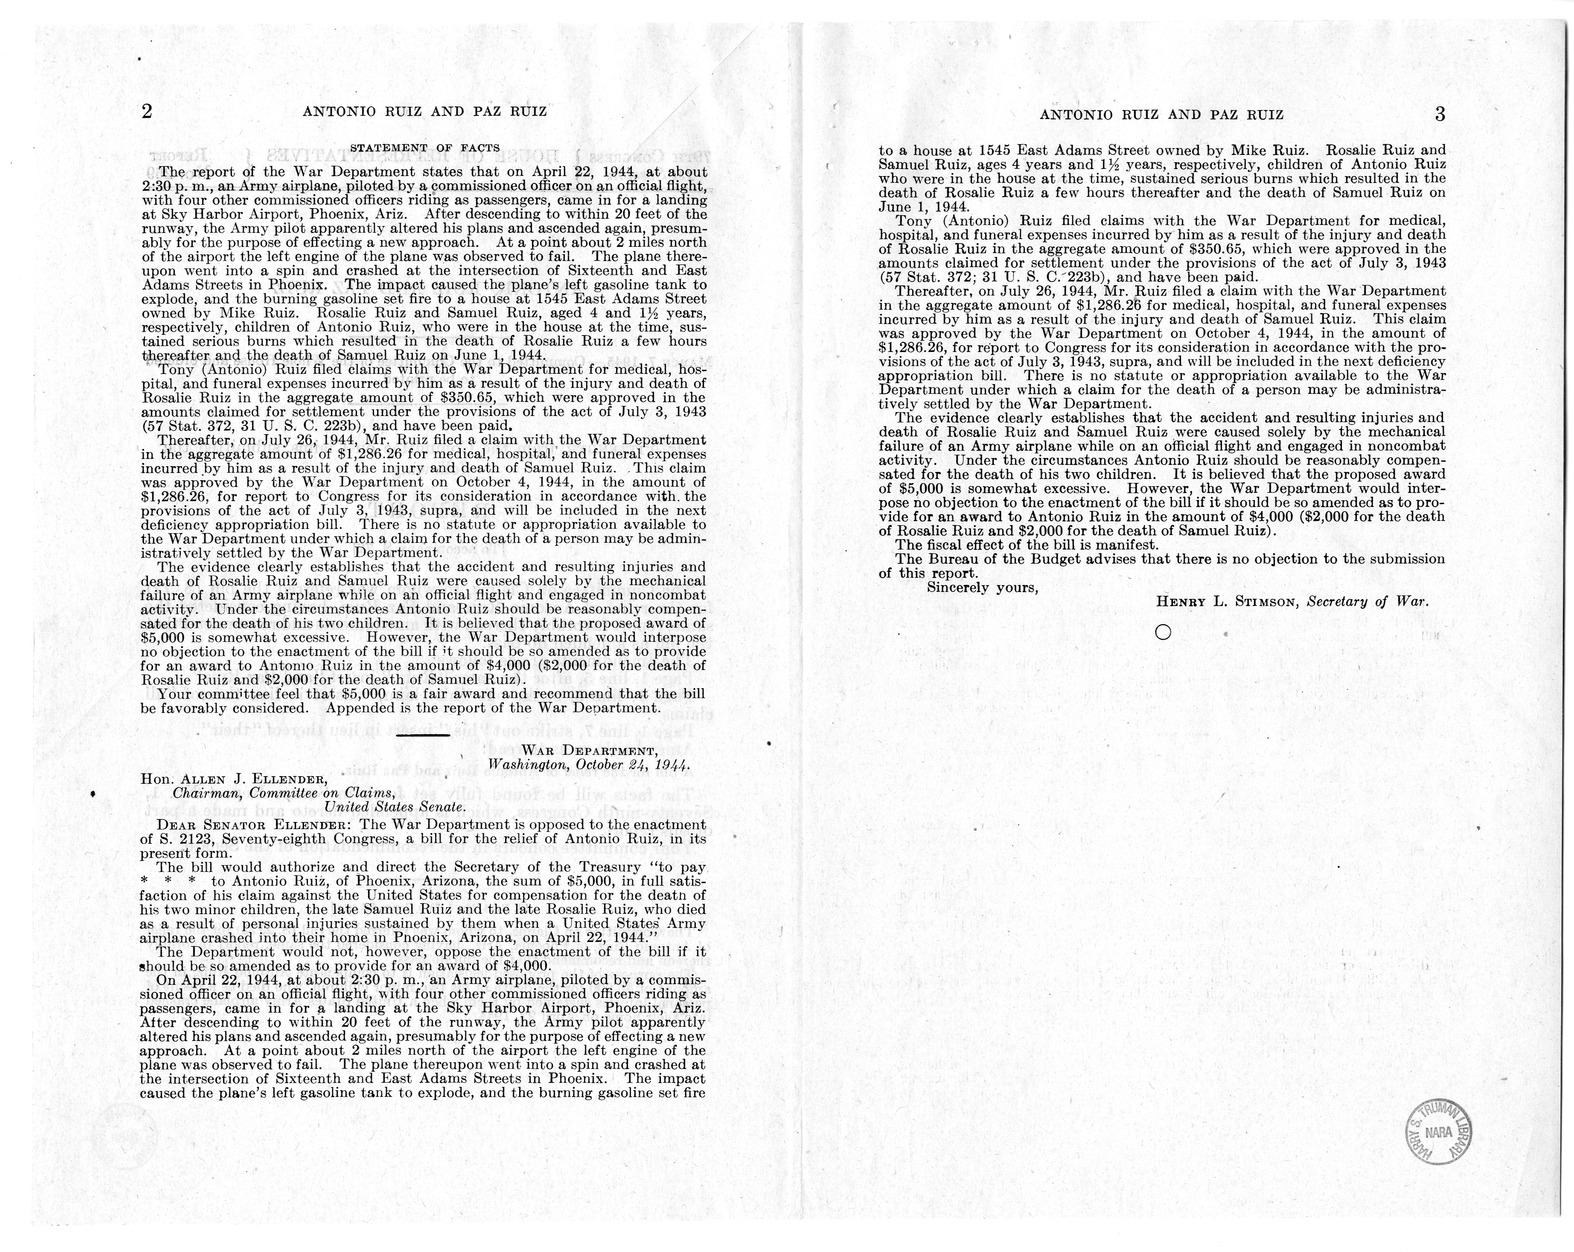 Memorandum from Frederick J. Bailey to M. C. Latta, S. 72, for the Relief of Antonio Ruiz, with Attachments